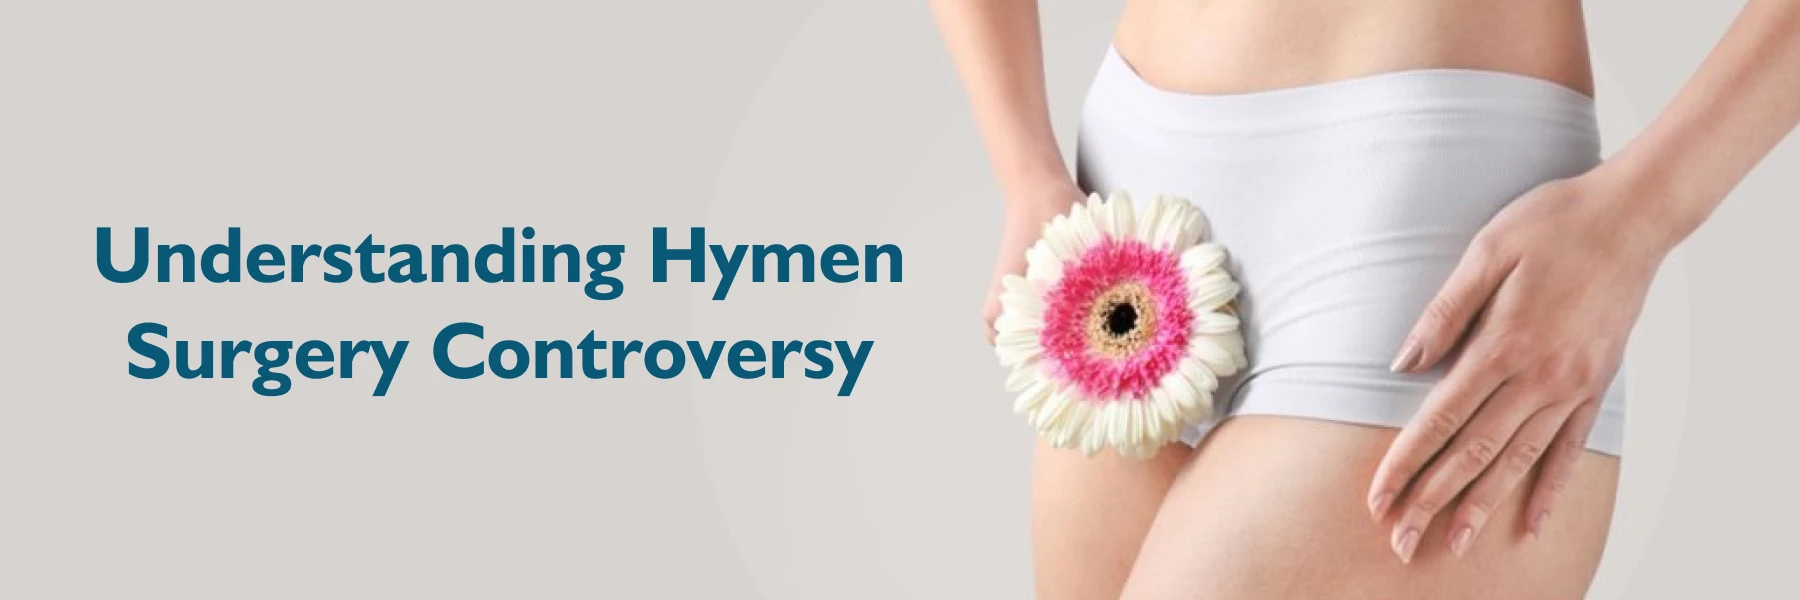 Hymen Surgery